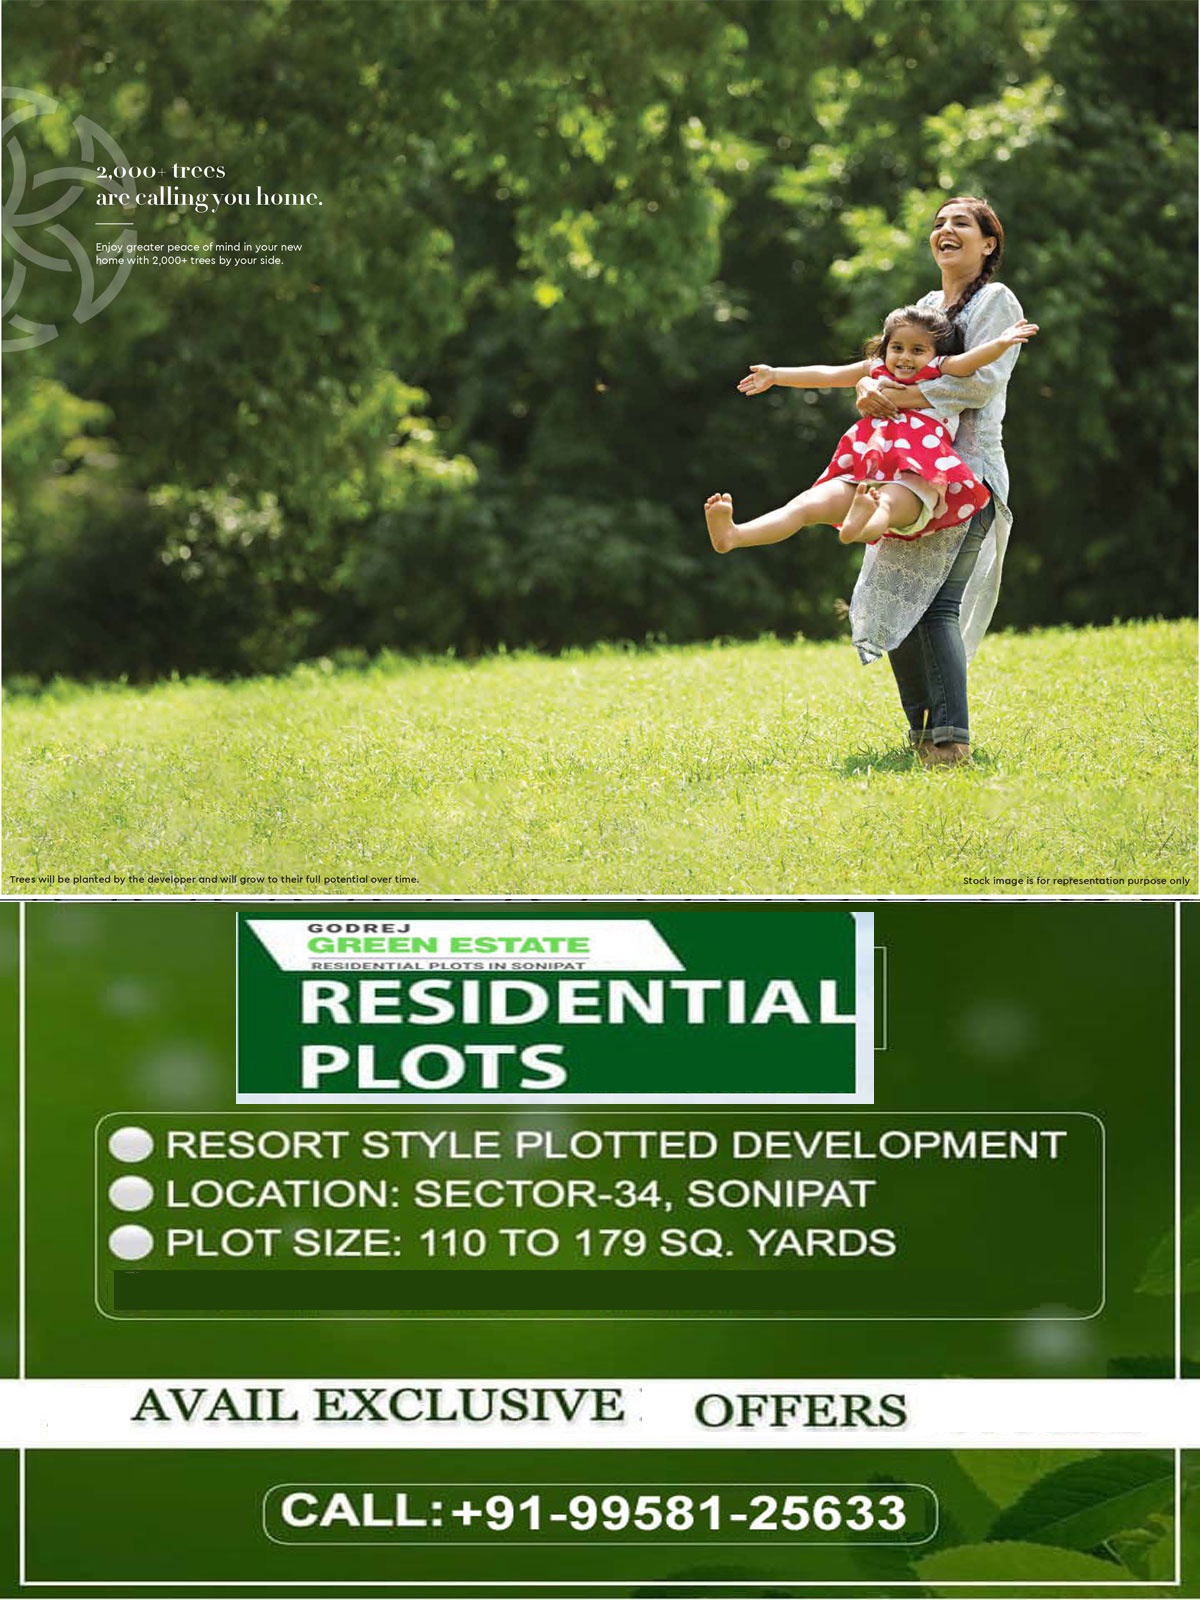 Enjoy a Vibrant Living Experience at Godrej Green Estate